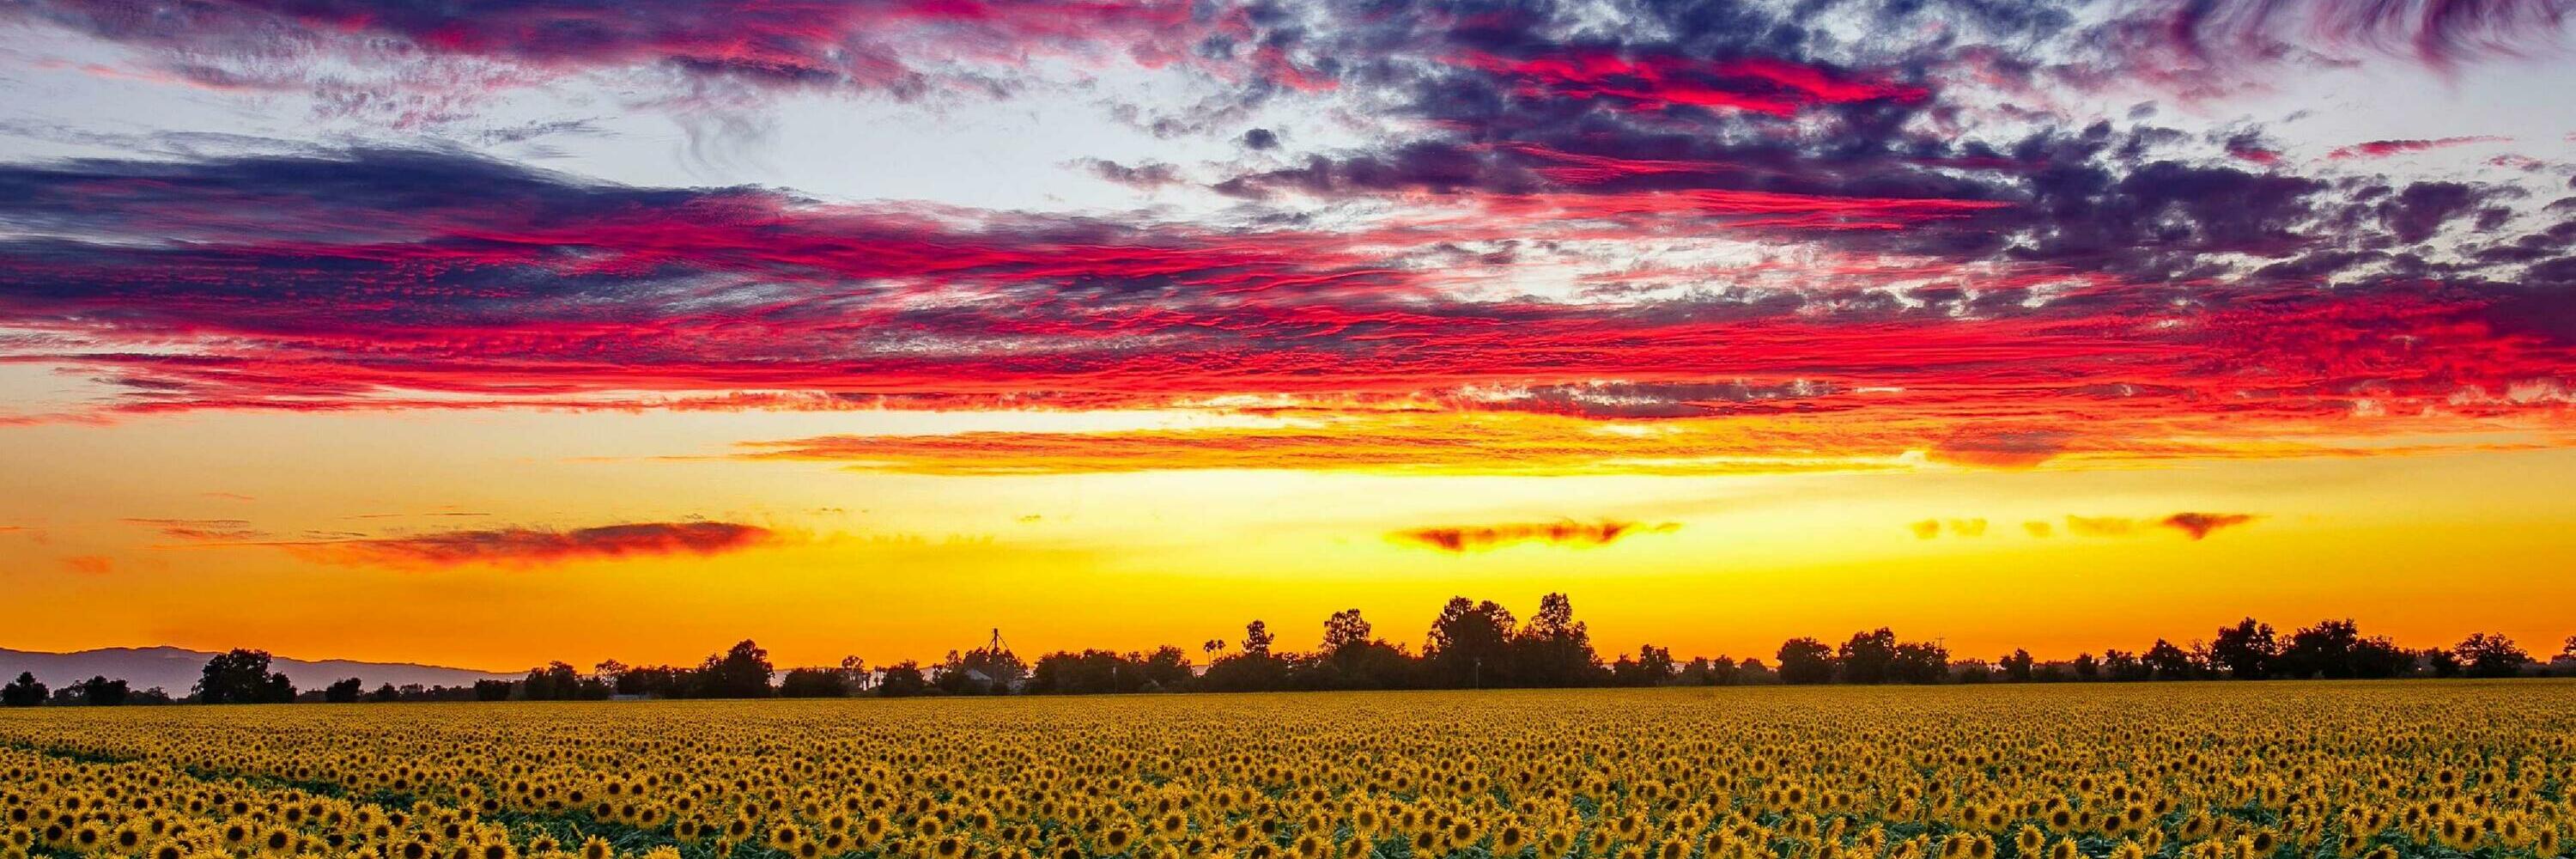 Woodland California Sunflower Field at Sunset